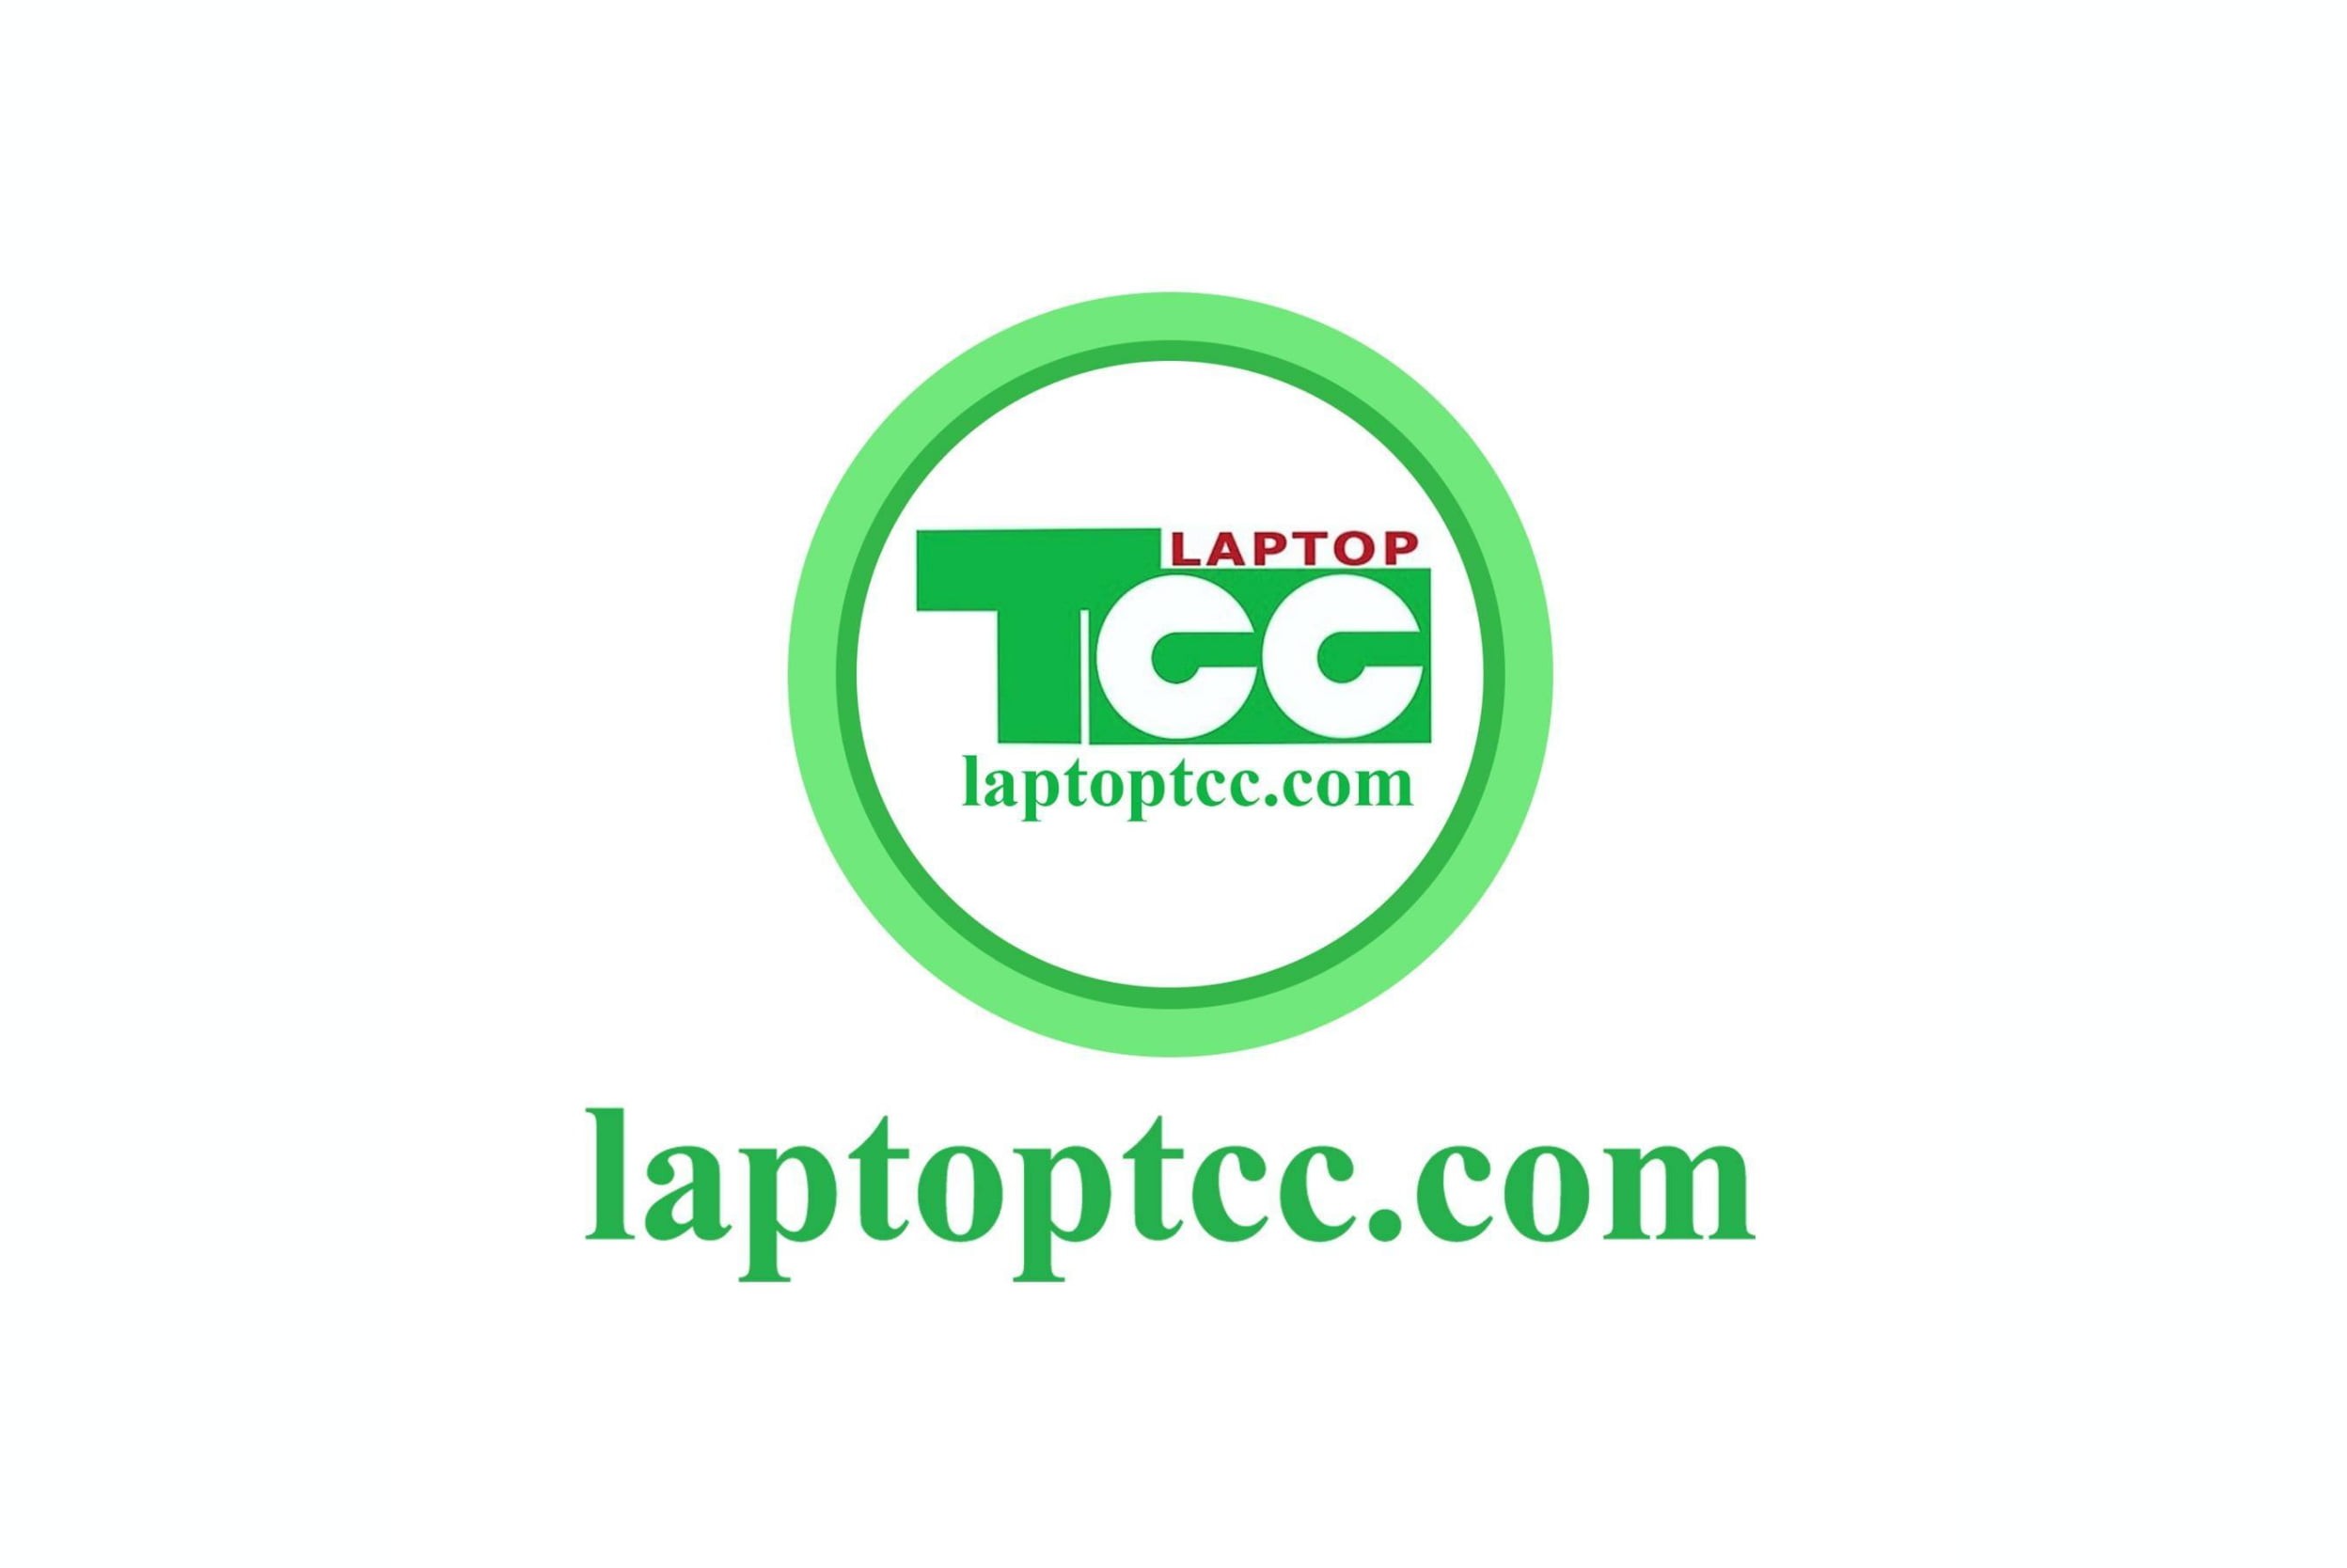 laptoptcc-logo